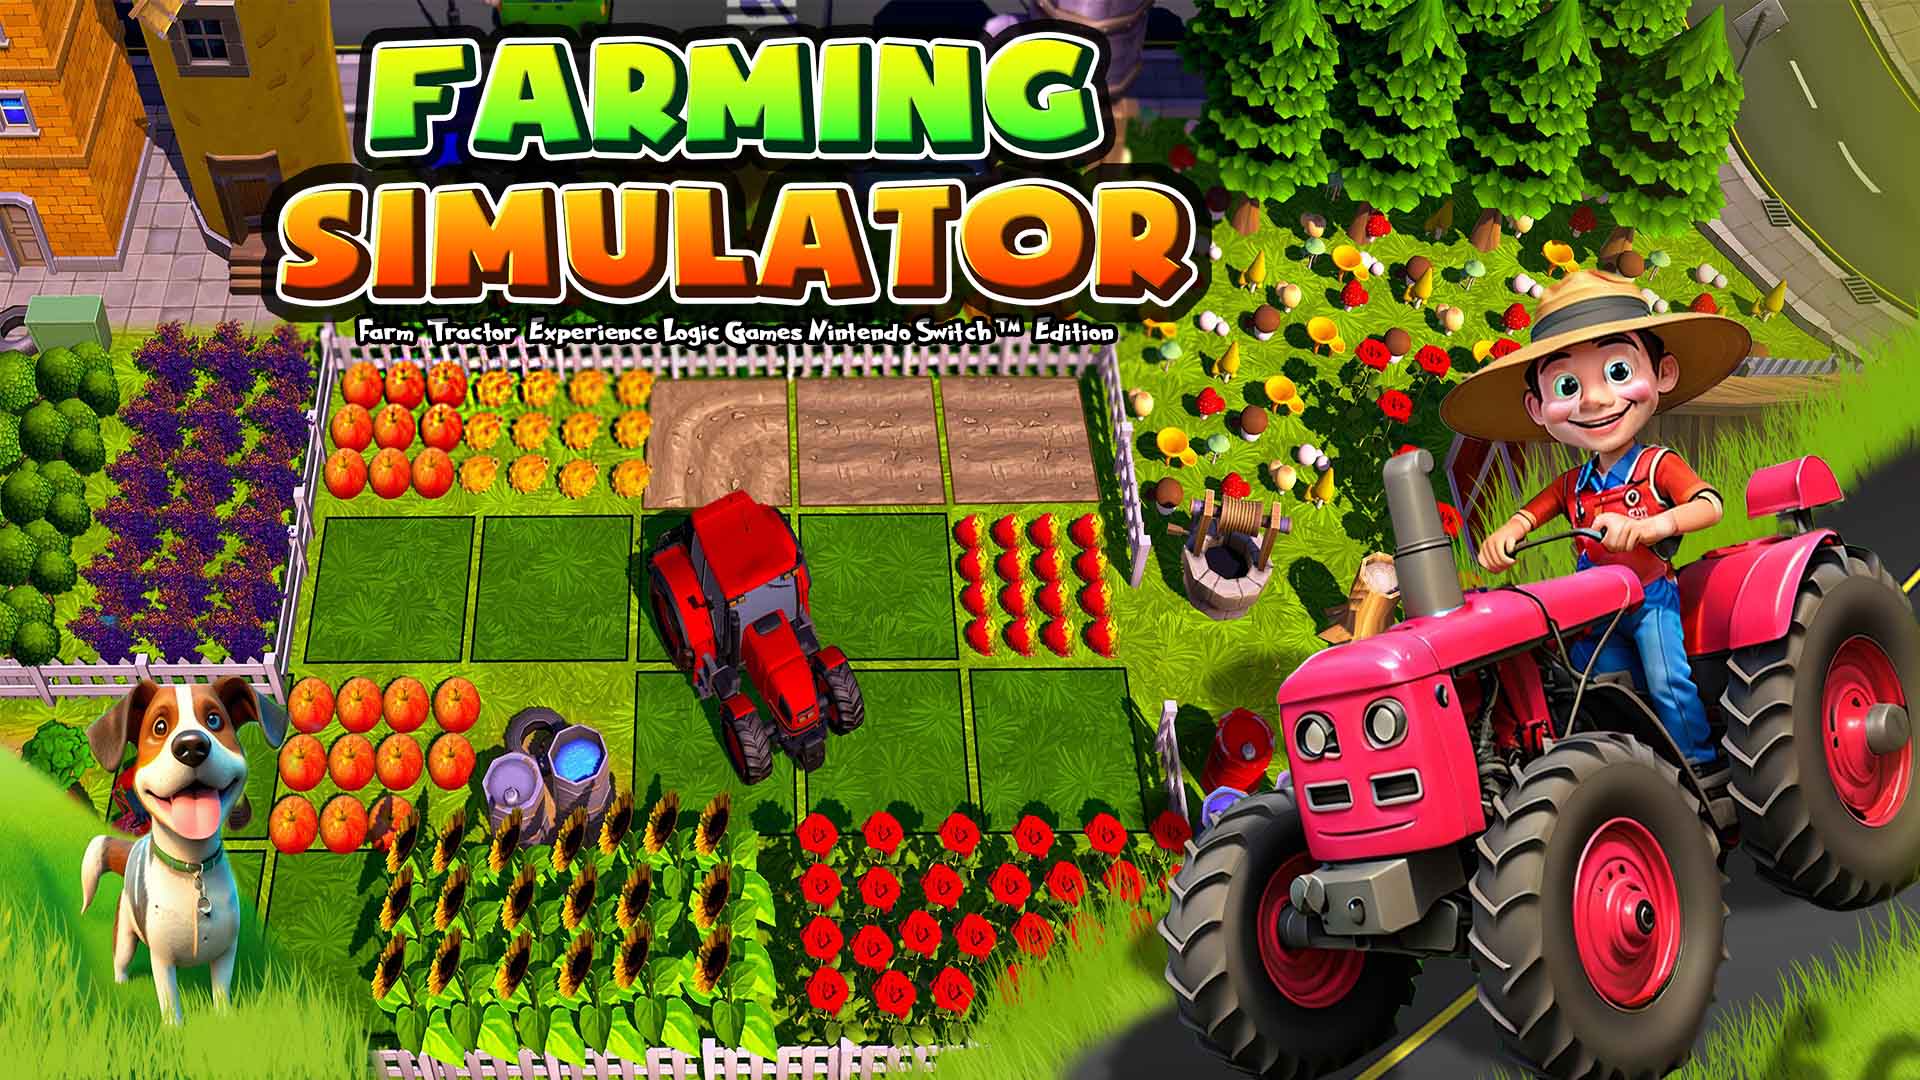  Farming Simulator - Farm, Tractor, Experience Logic Games Nintendo Switch™ Edition